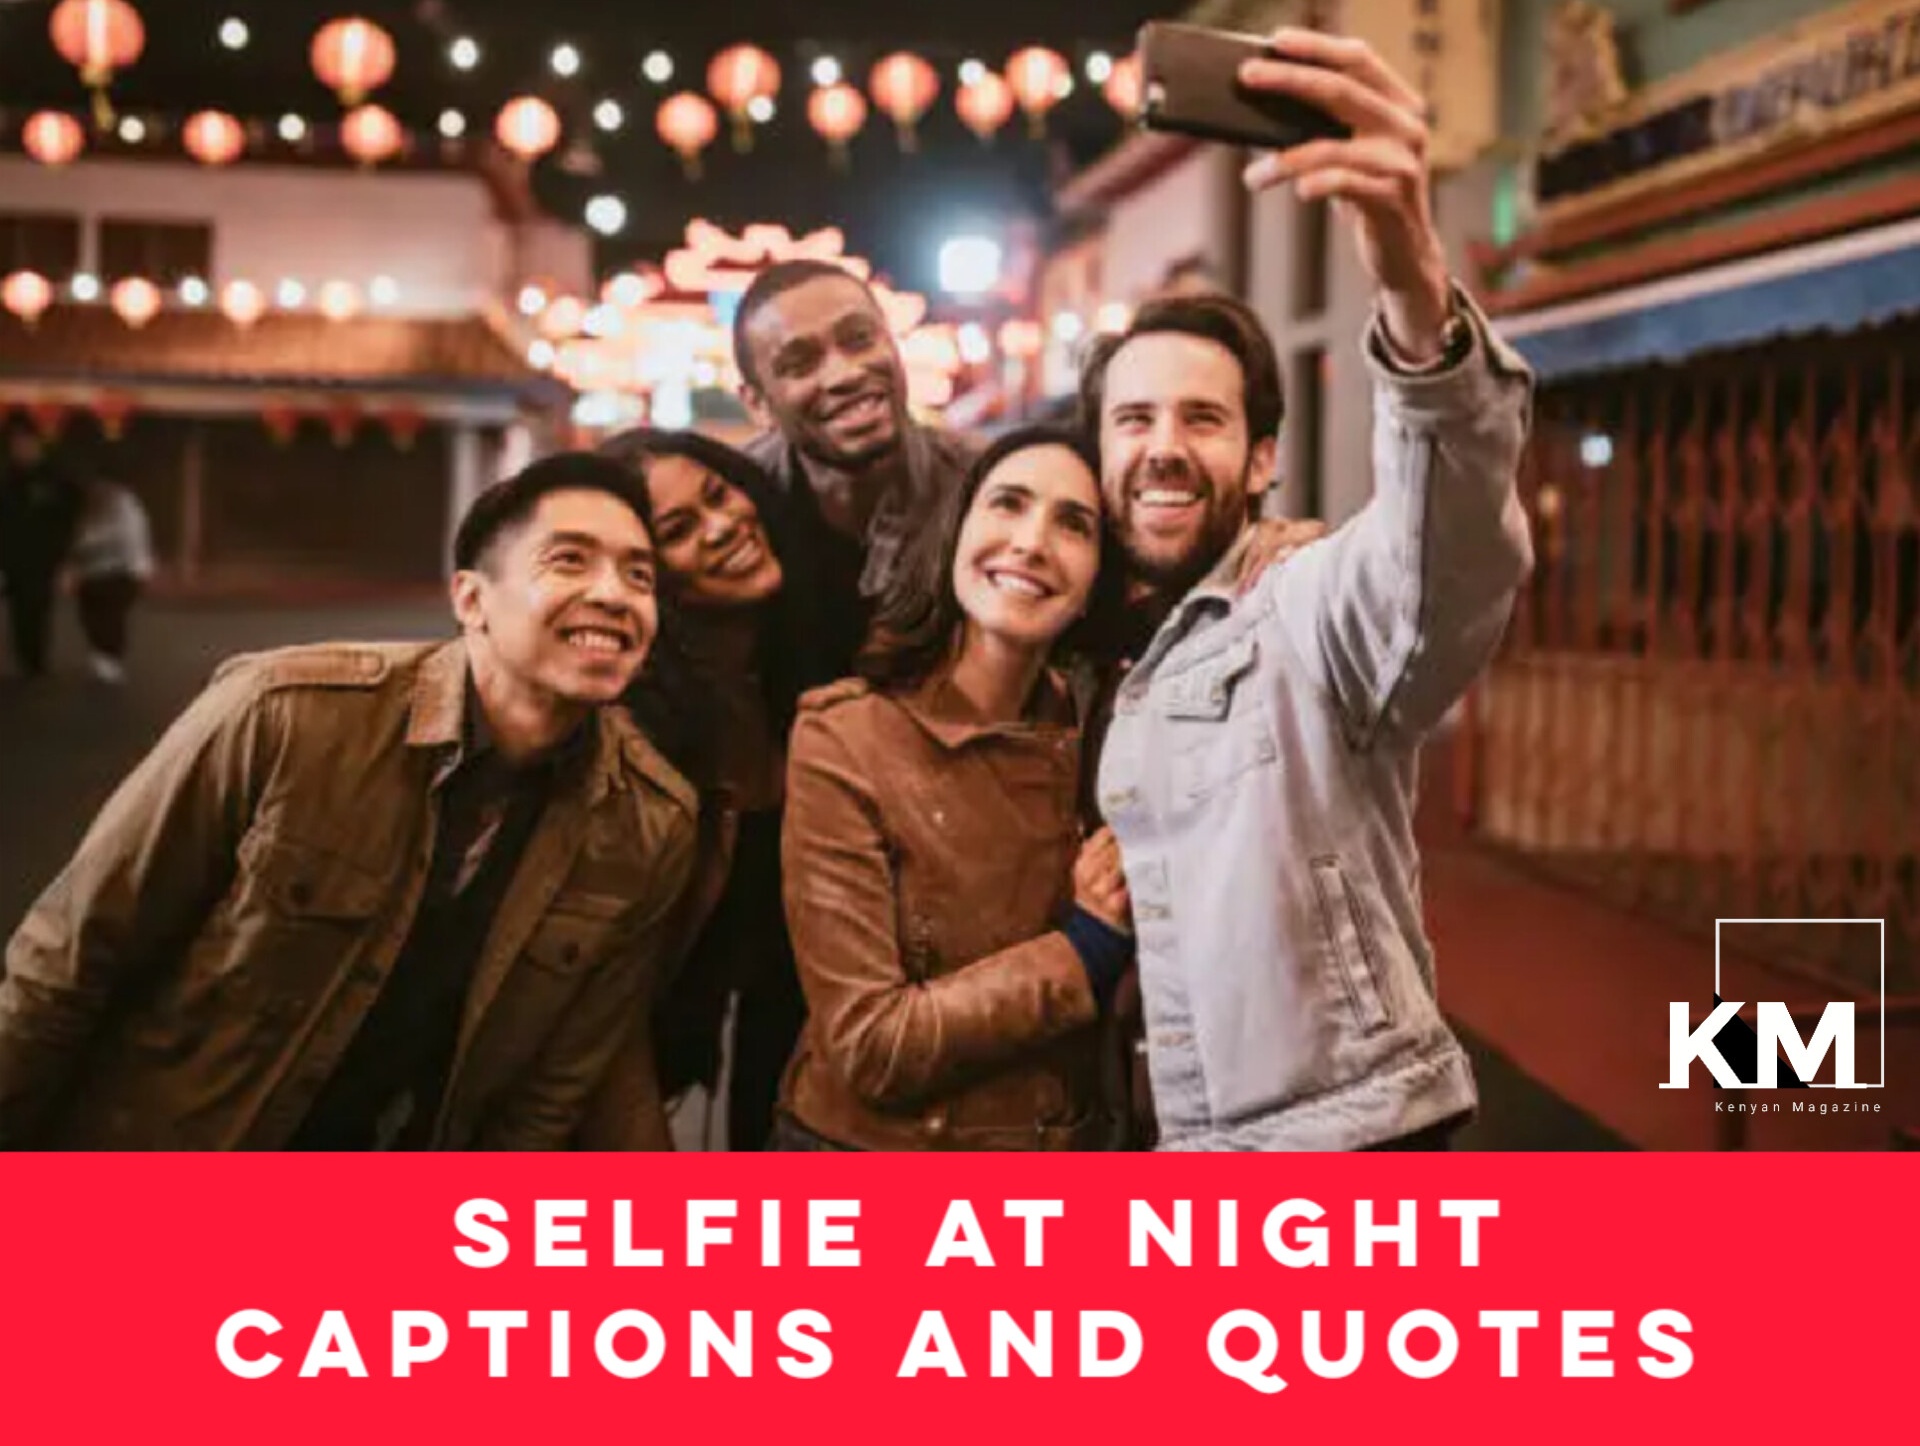 Selfie captions at night